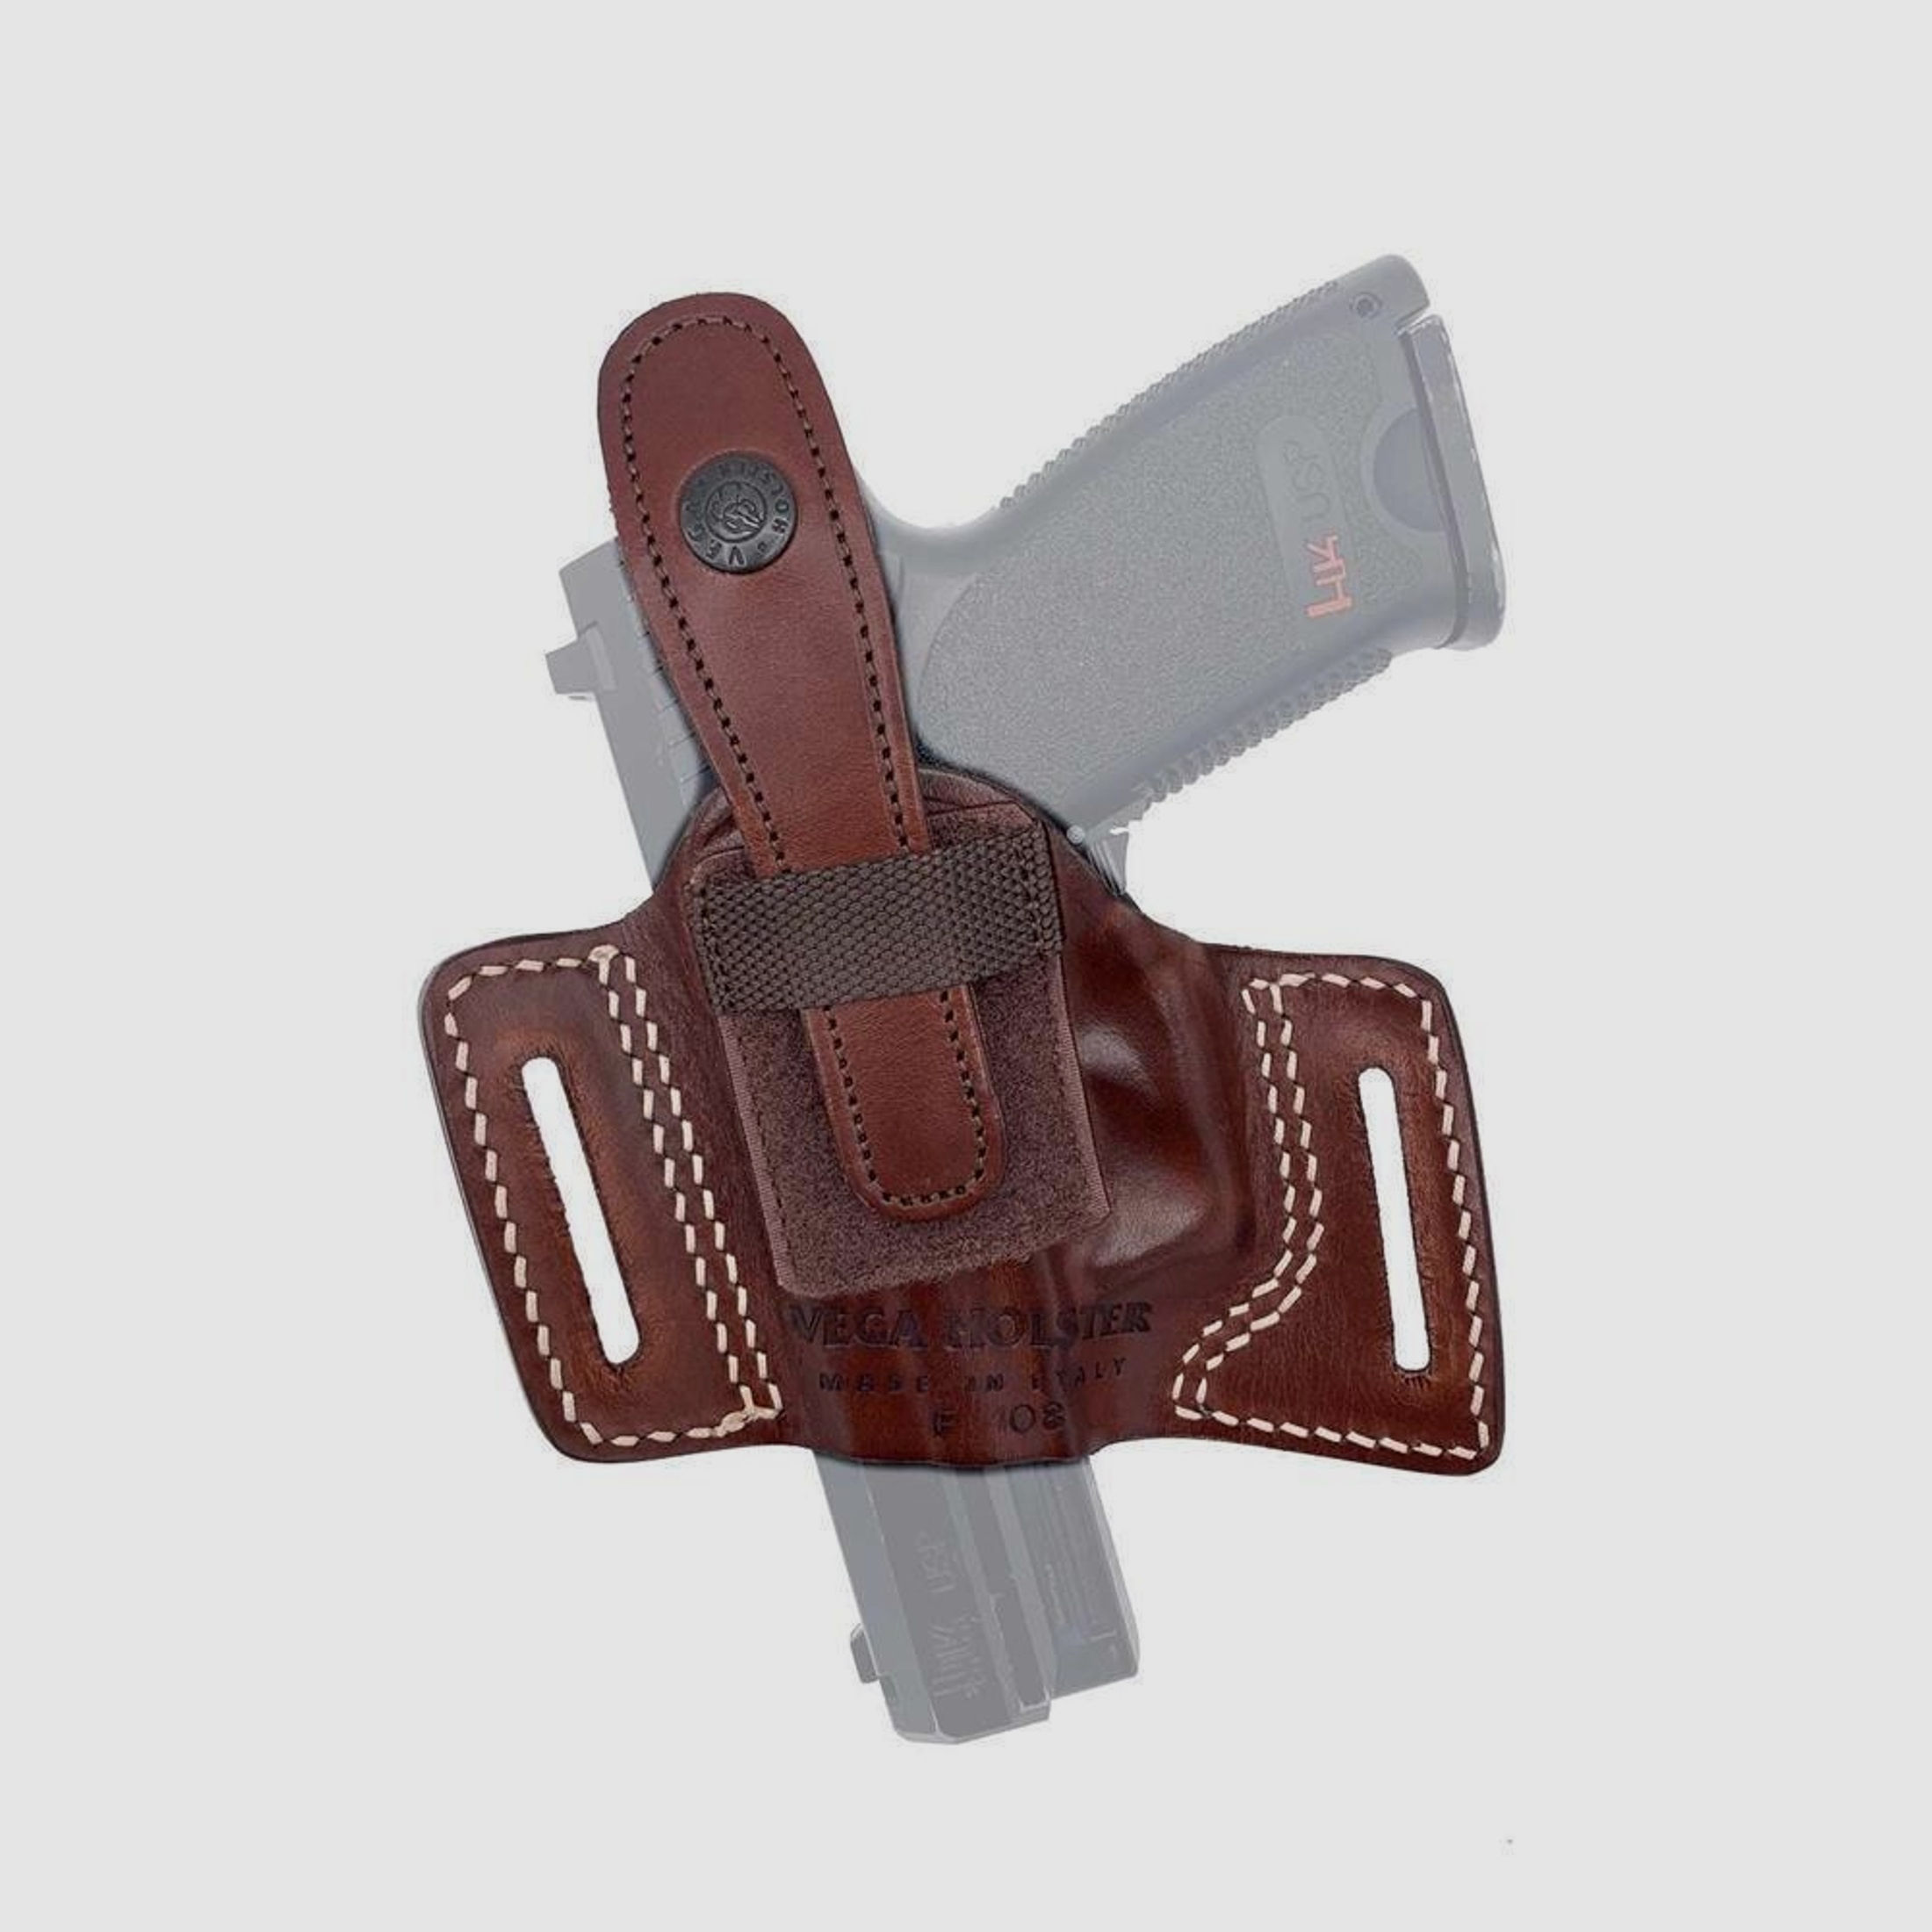 Gürtelholster mit offener Mündung & Sicherung Glock 20/21, H&amp;K USP, Röhm RG 96, Walther PPQ M2 45 .ACP-Braun-Linkshänder